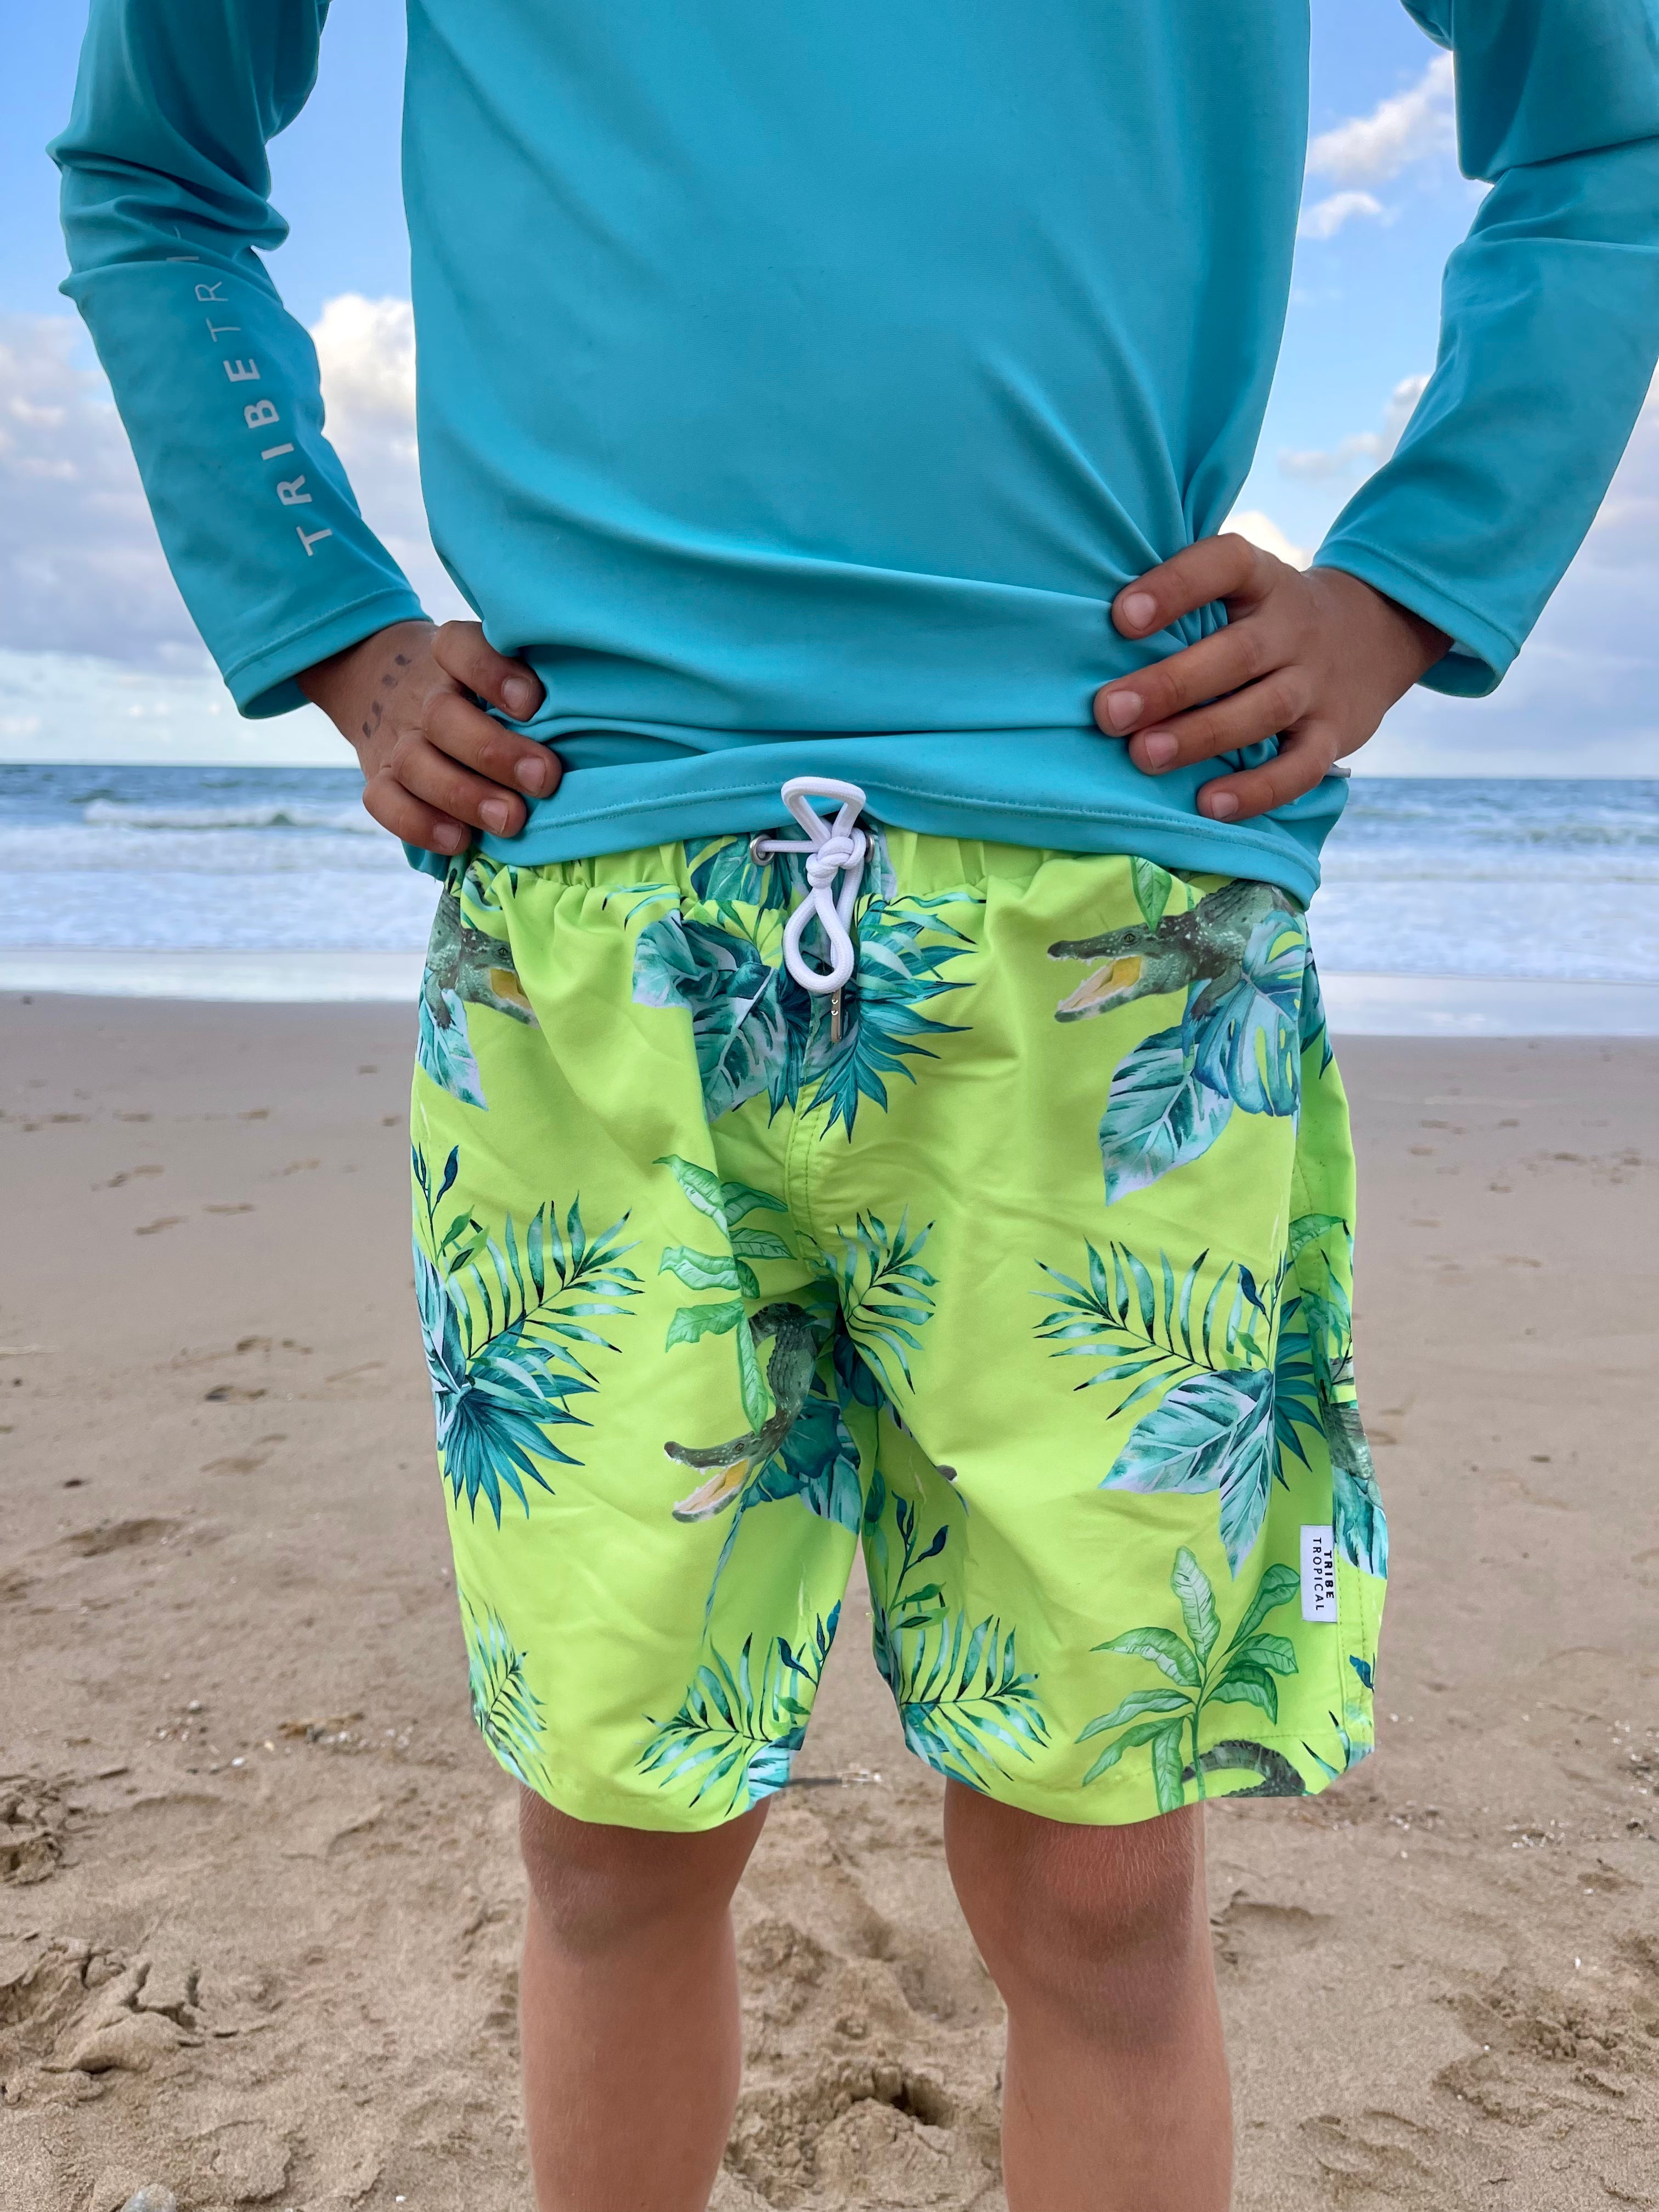 Boys Swim Trunks / Board Shorts - Hamilton Island